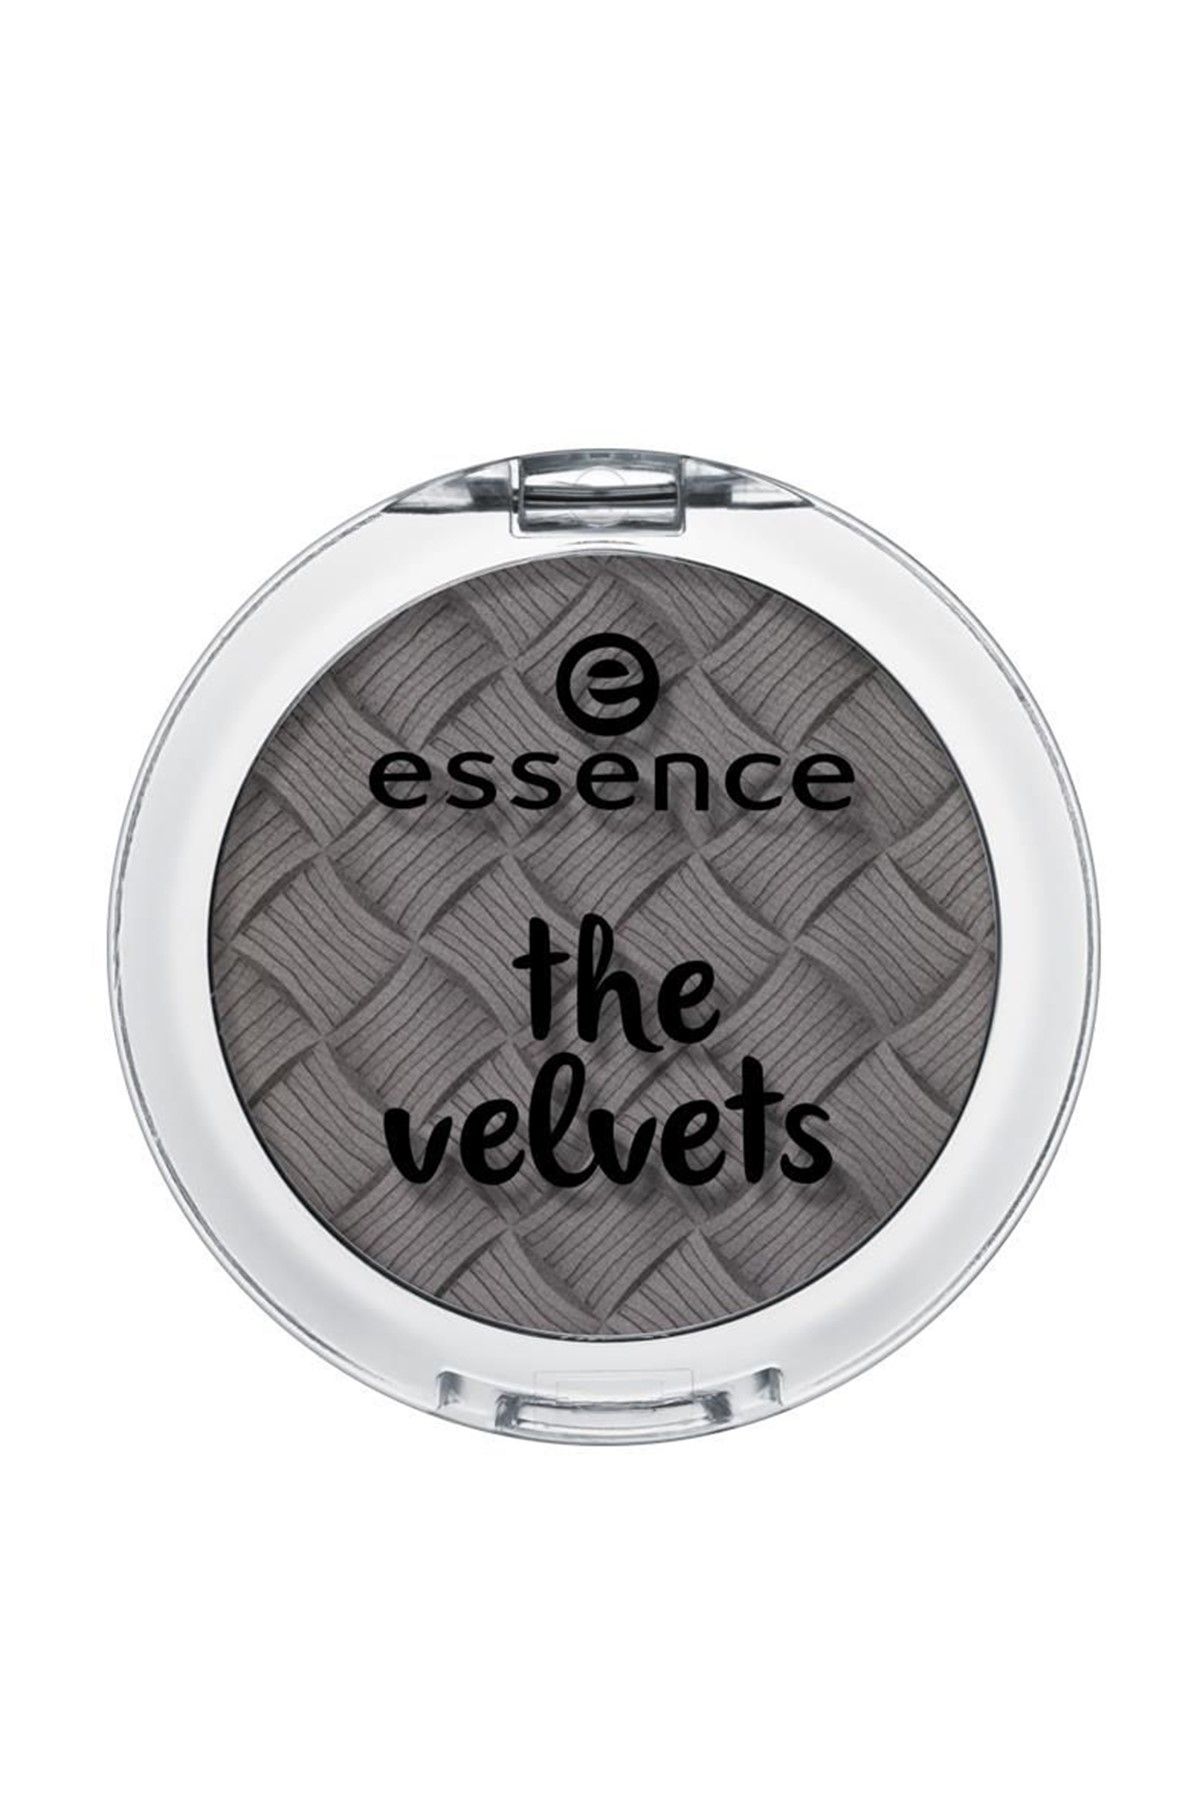 Essence Göz Farı - The Velvets You're The Greytest 04 4250947565728